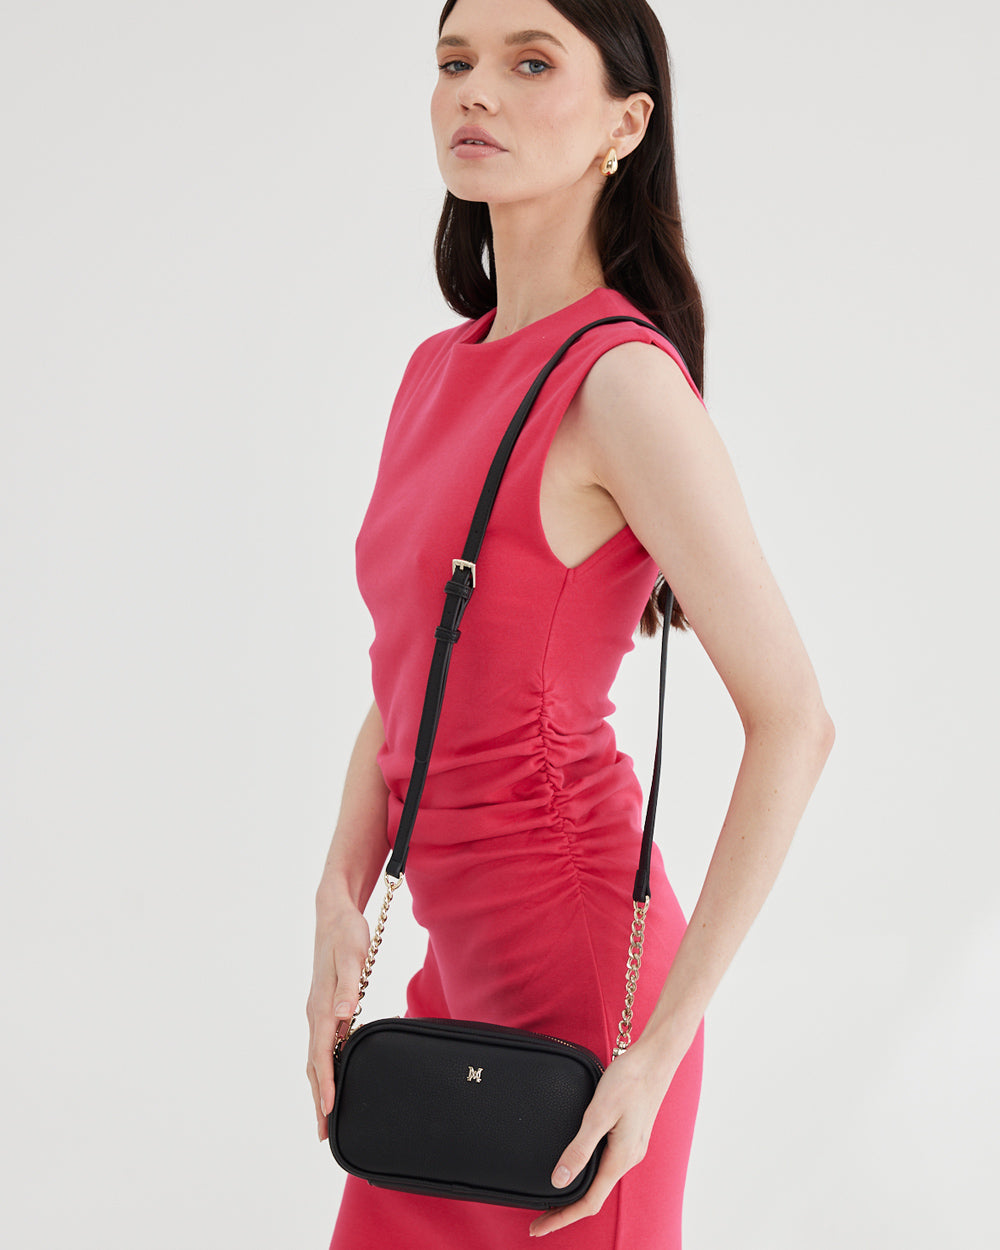 2022 Designer Sac Popular Chain Mini Bags Handbag 2022 New Fashion Wild  Shoulder/Crossbody Bag Net Red Texture Square Sling Bag